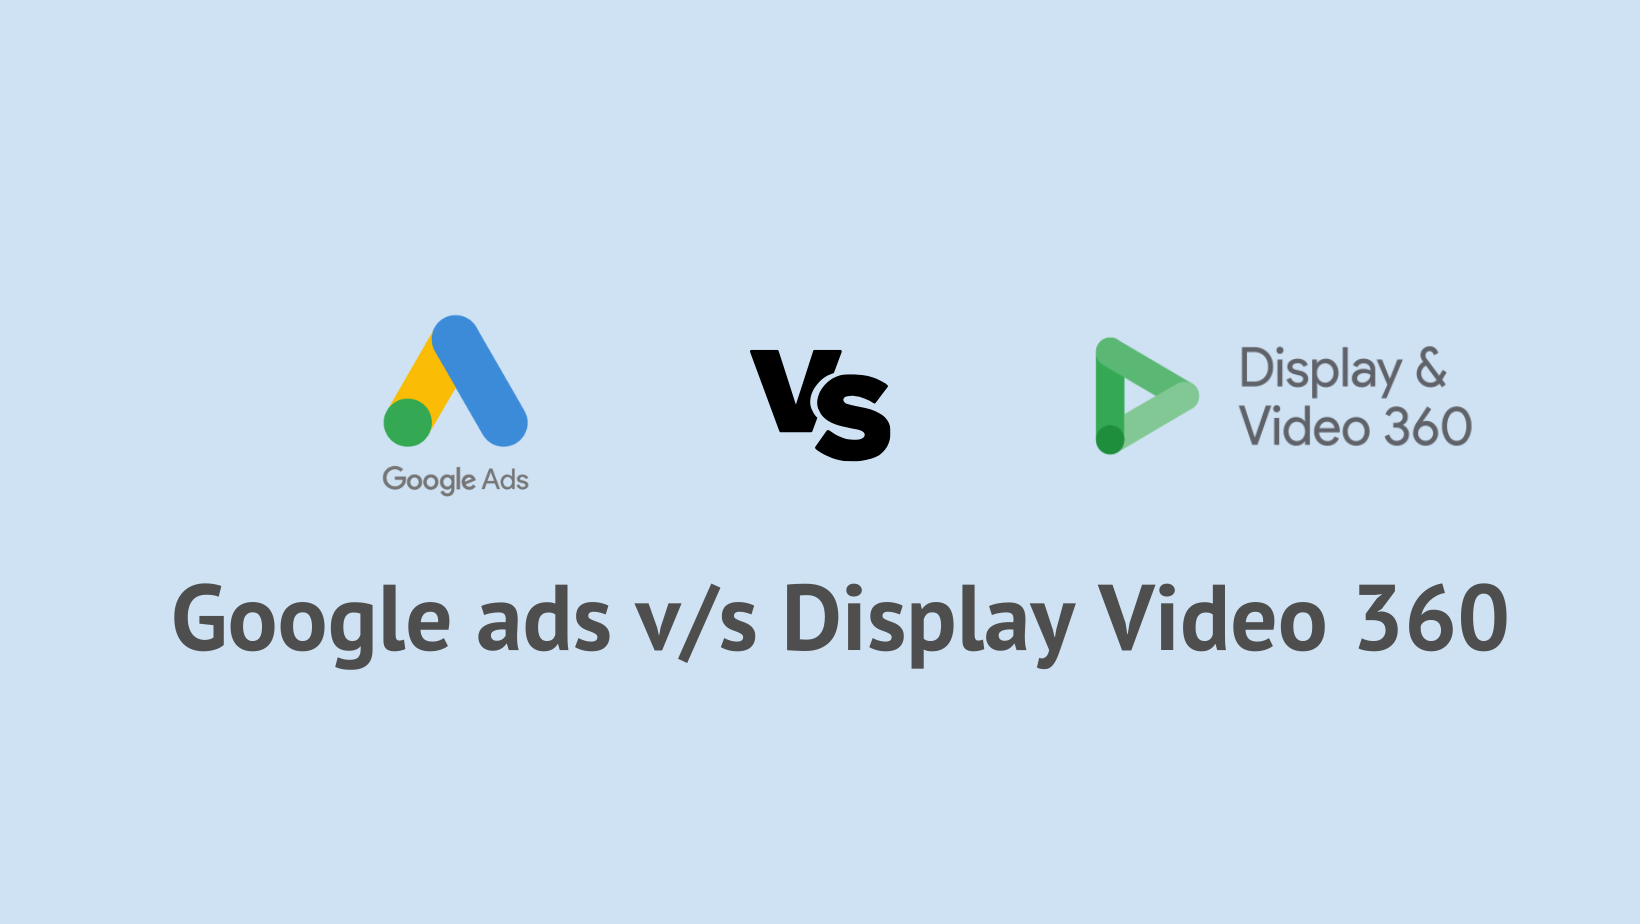 Google ads v/s dv360